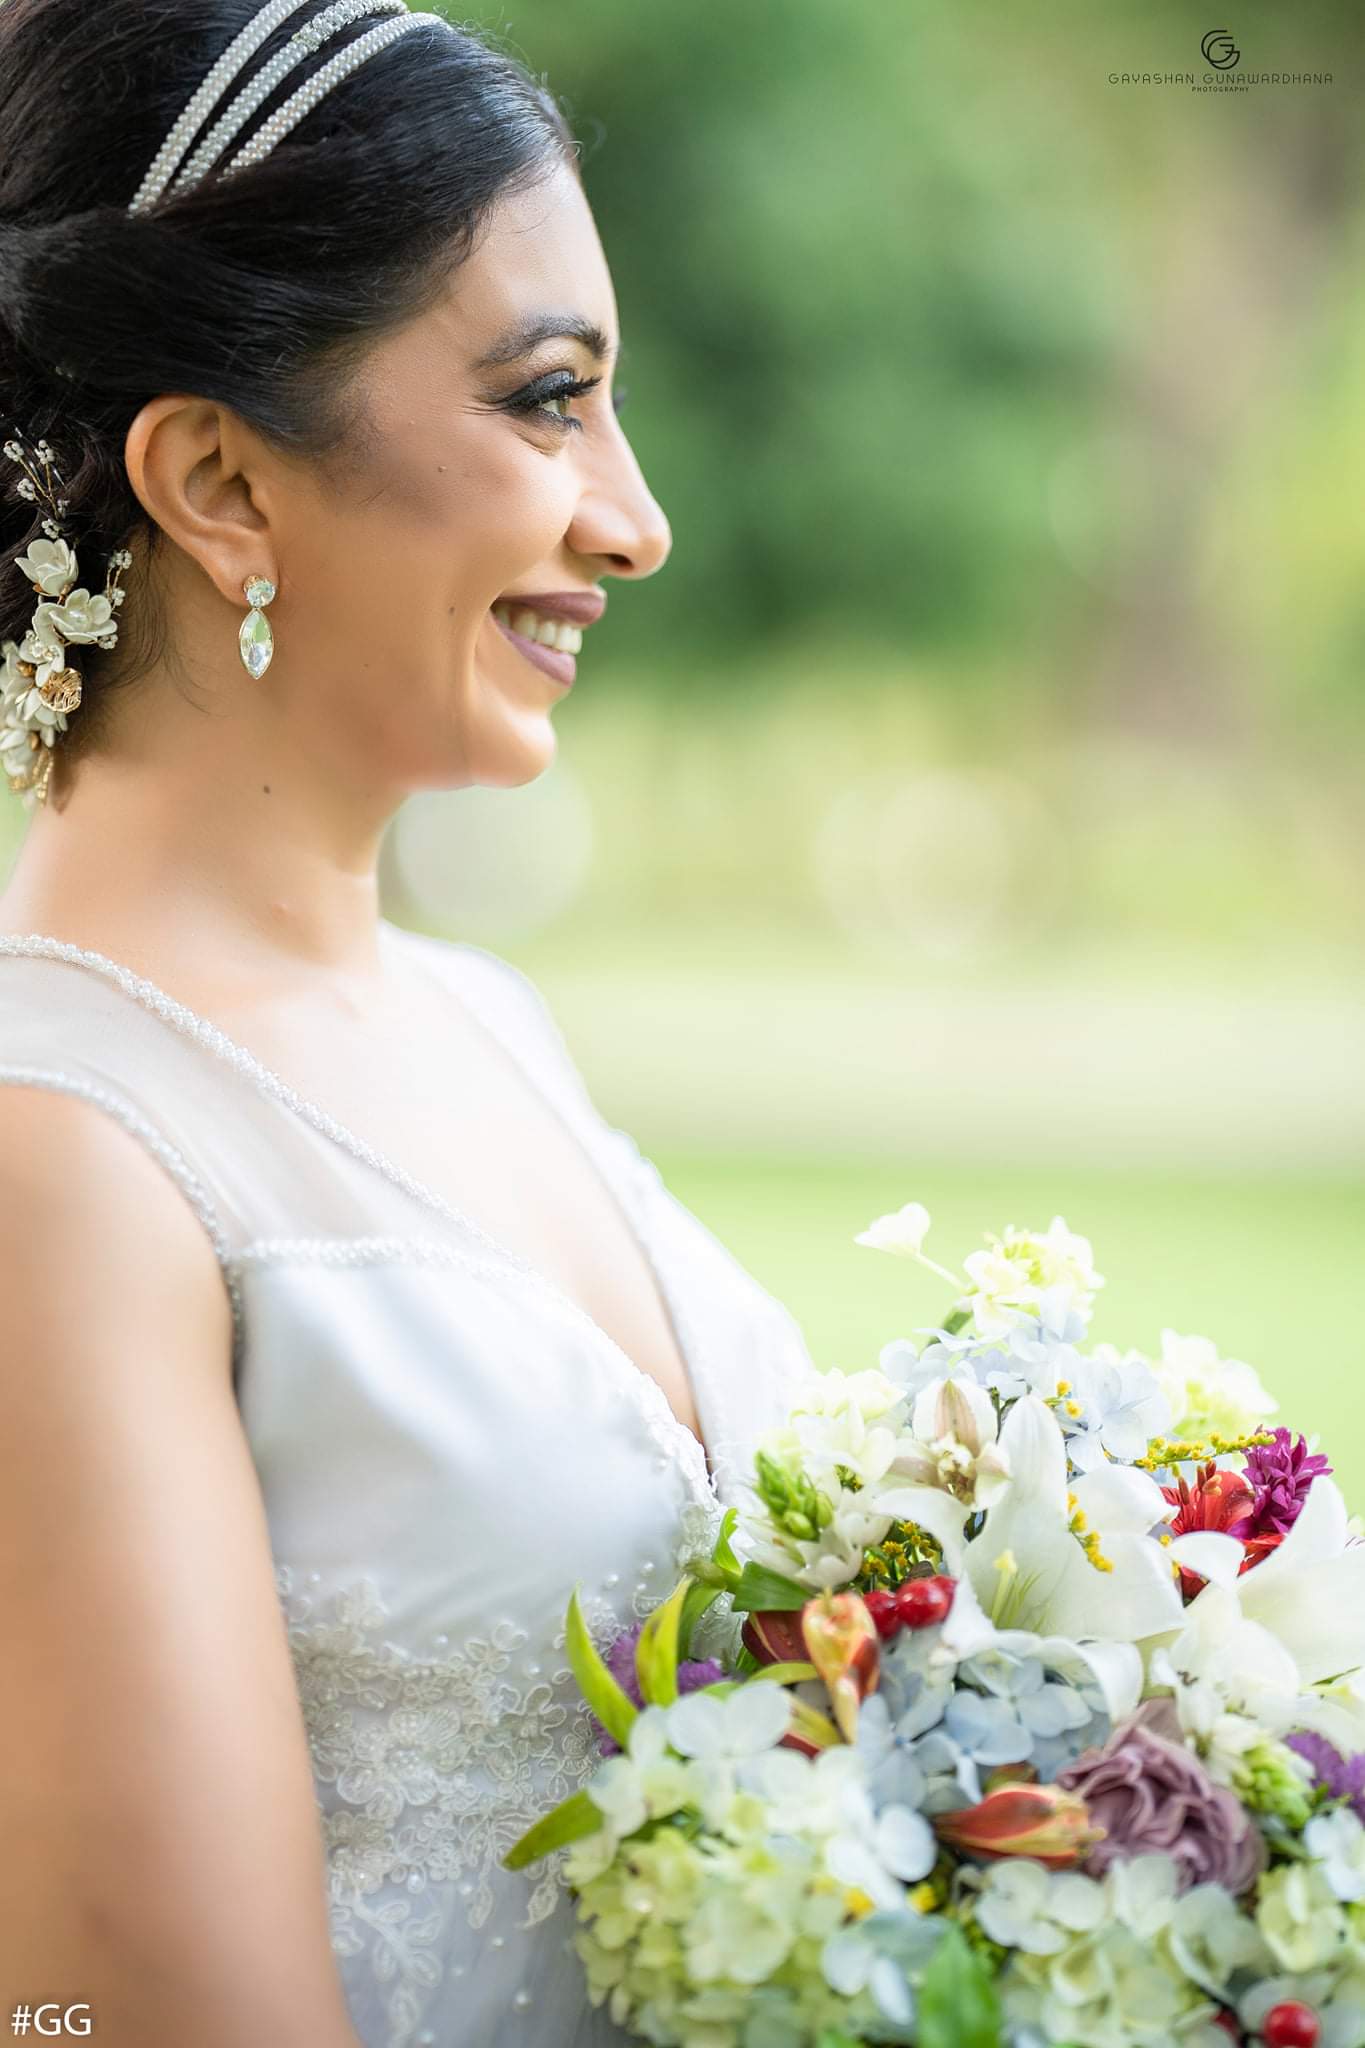 Sri Lankan Actress Sachini Ayendra Photoshoot in Bridal dress